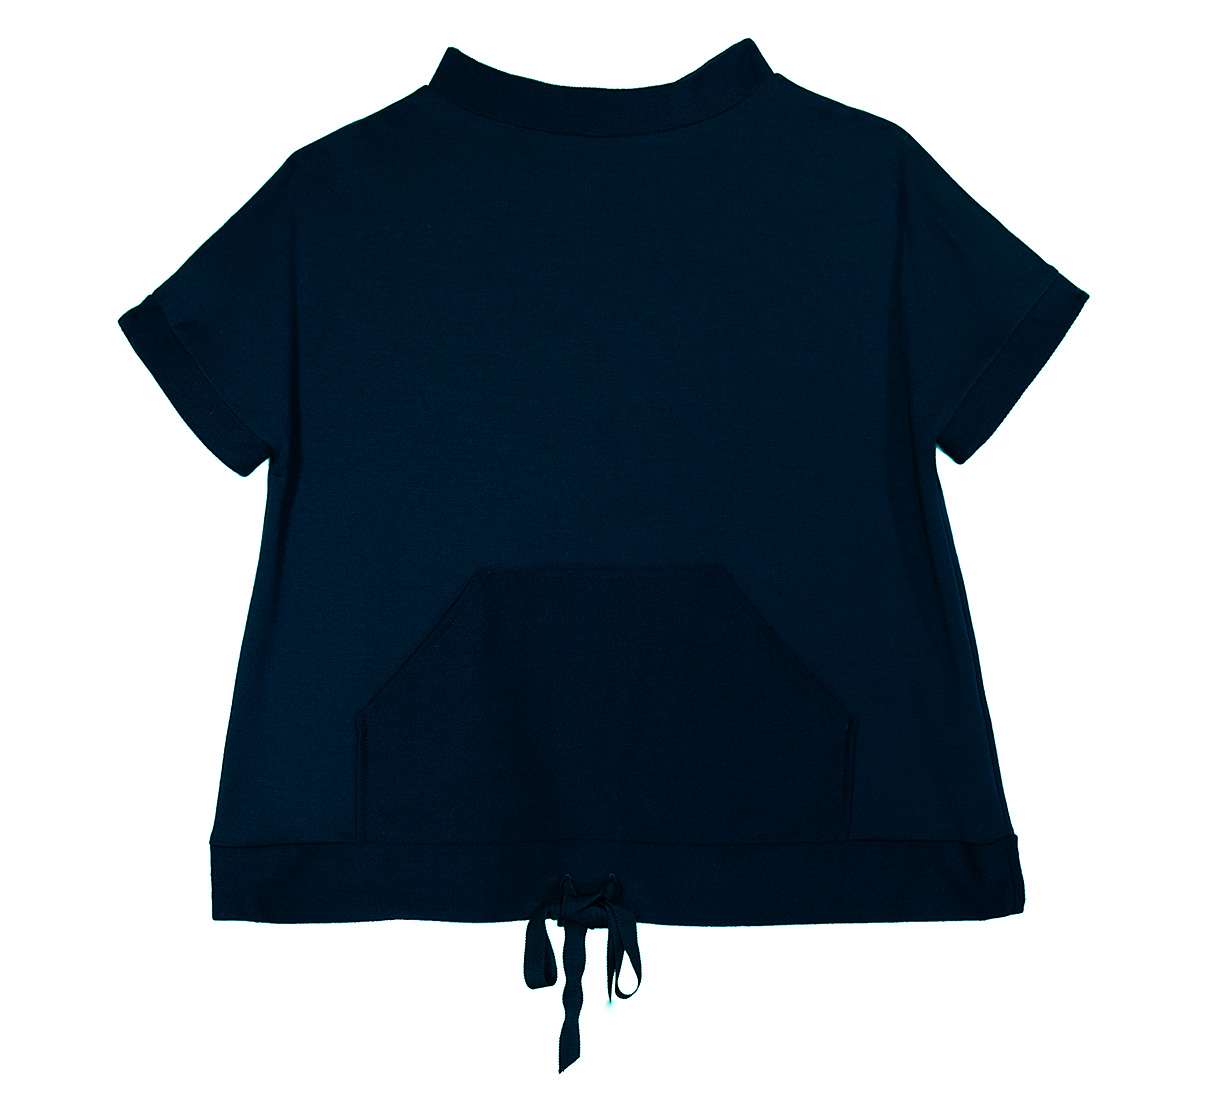 Curtain Call Crop Sweatshirt | Vintage Inspired Warmups | Designer Athletic Wear | Between the Sheets Loungewear